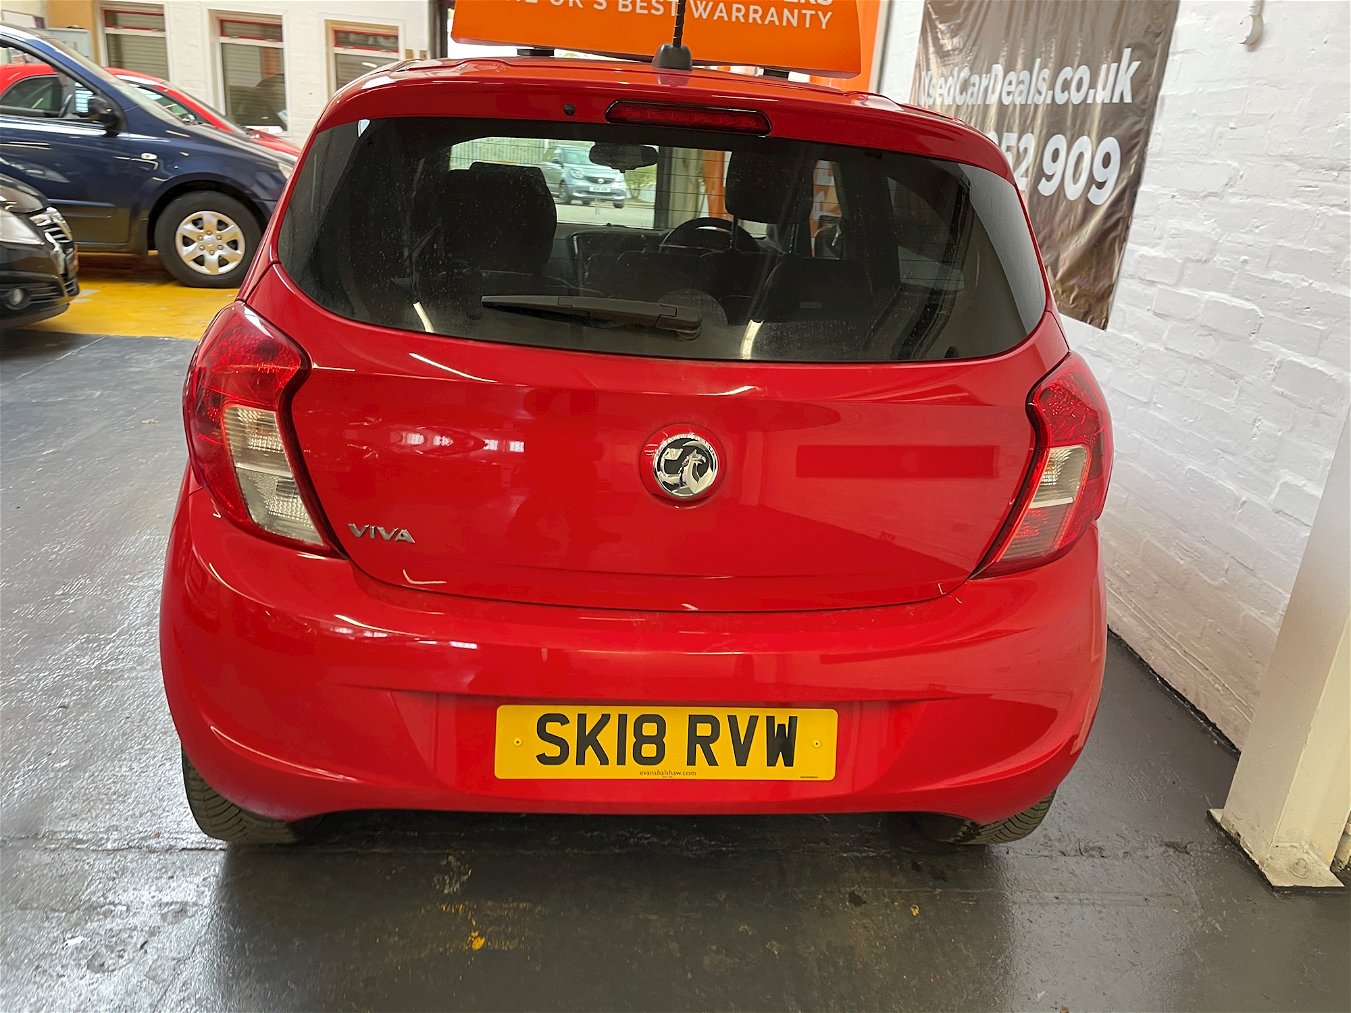 Used Vauxhall Viva SL 2018 5dr Manual (SK18RVW)  UsedCarDeals.co.uk